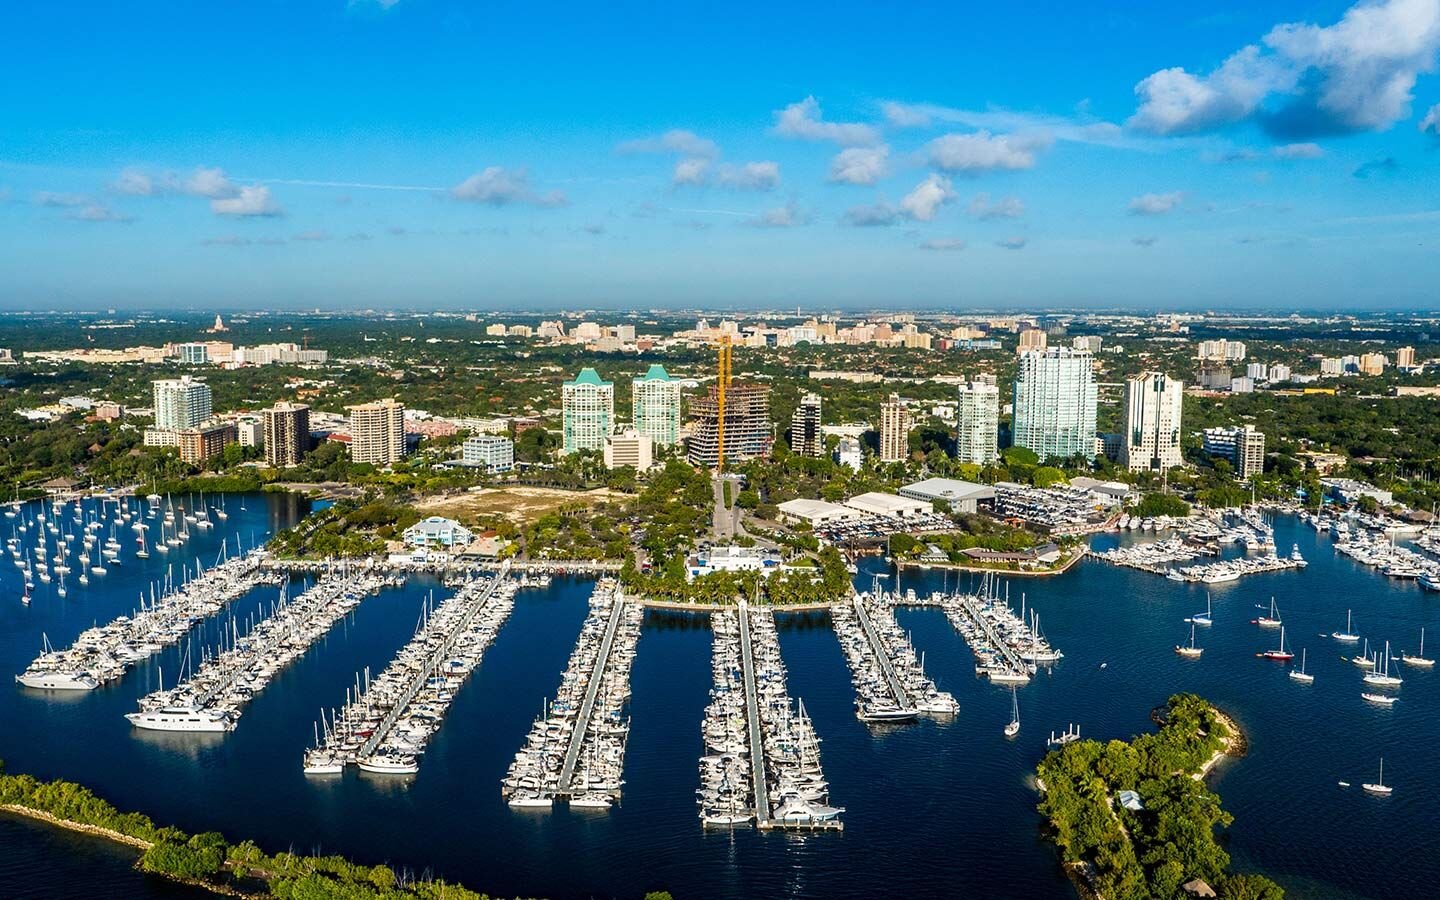 coconut-grove-marina-city-aerial-1440x900.jpeg